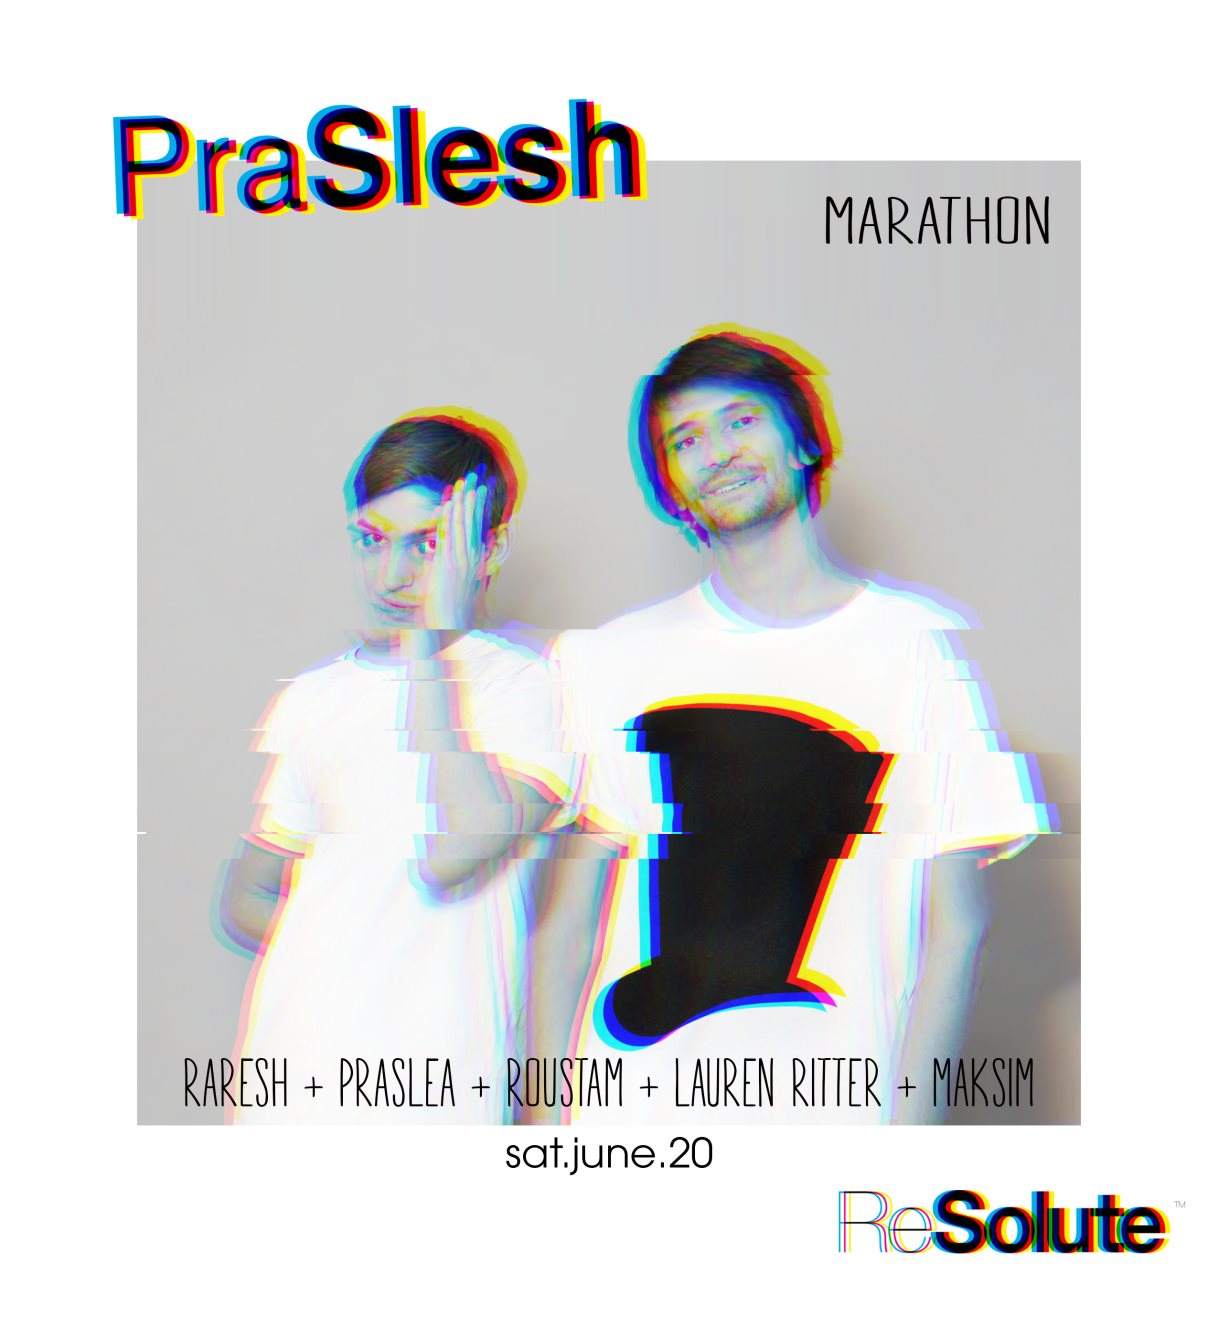 Raresh + Praslea = Praslesh Marathon - Página trasera